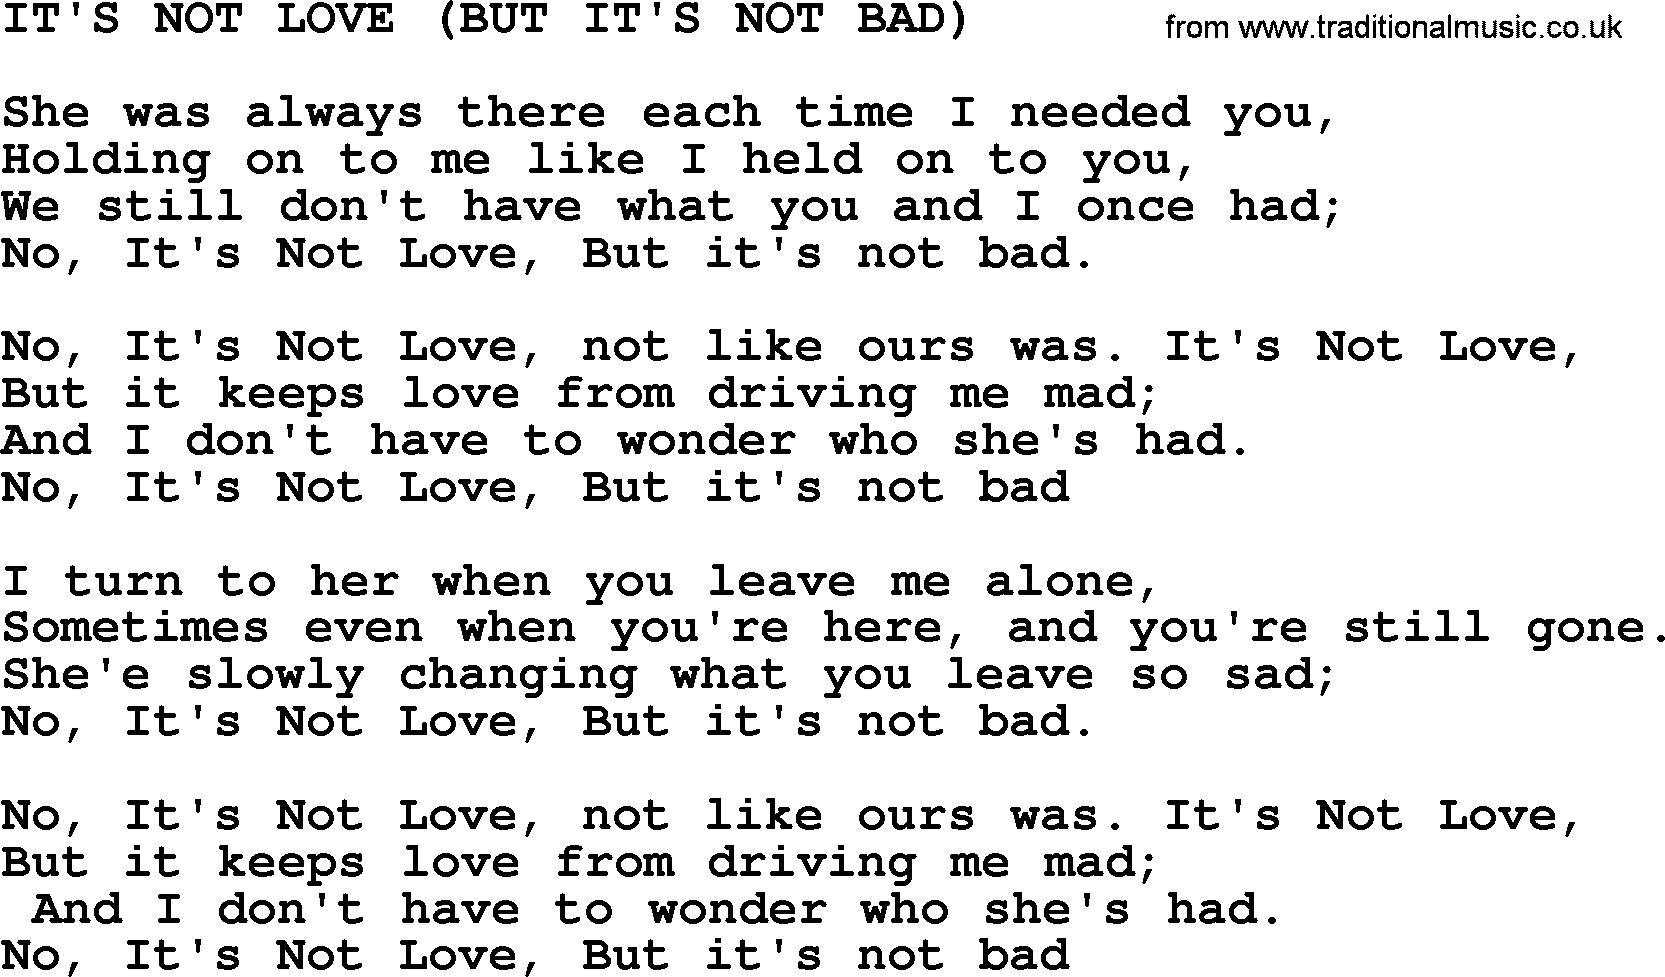 Merle Haggard song: It's Not Love But It's Not Bad, lyrics.